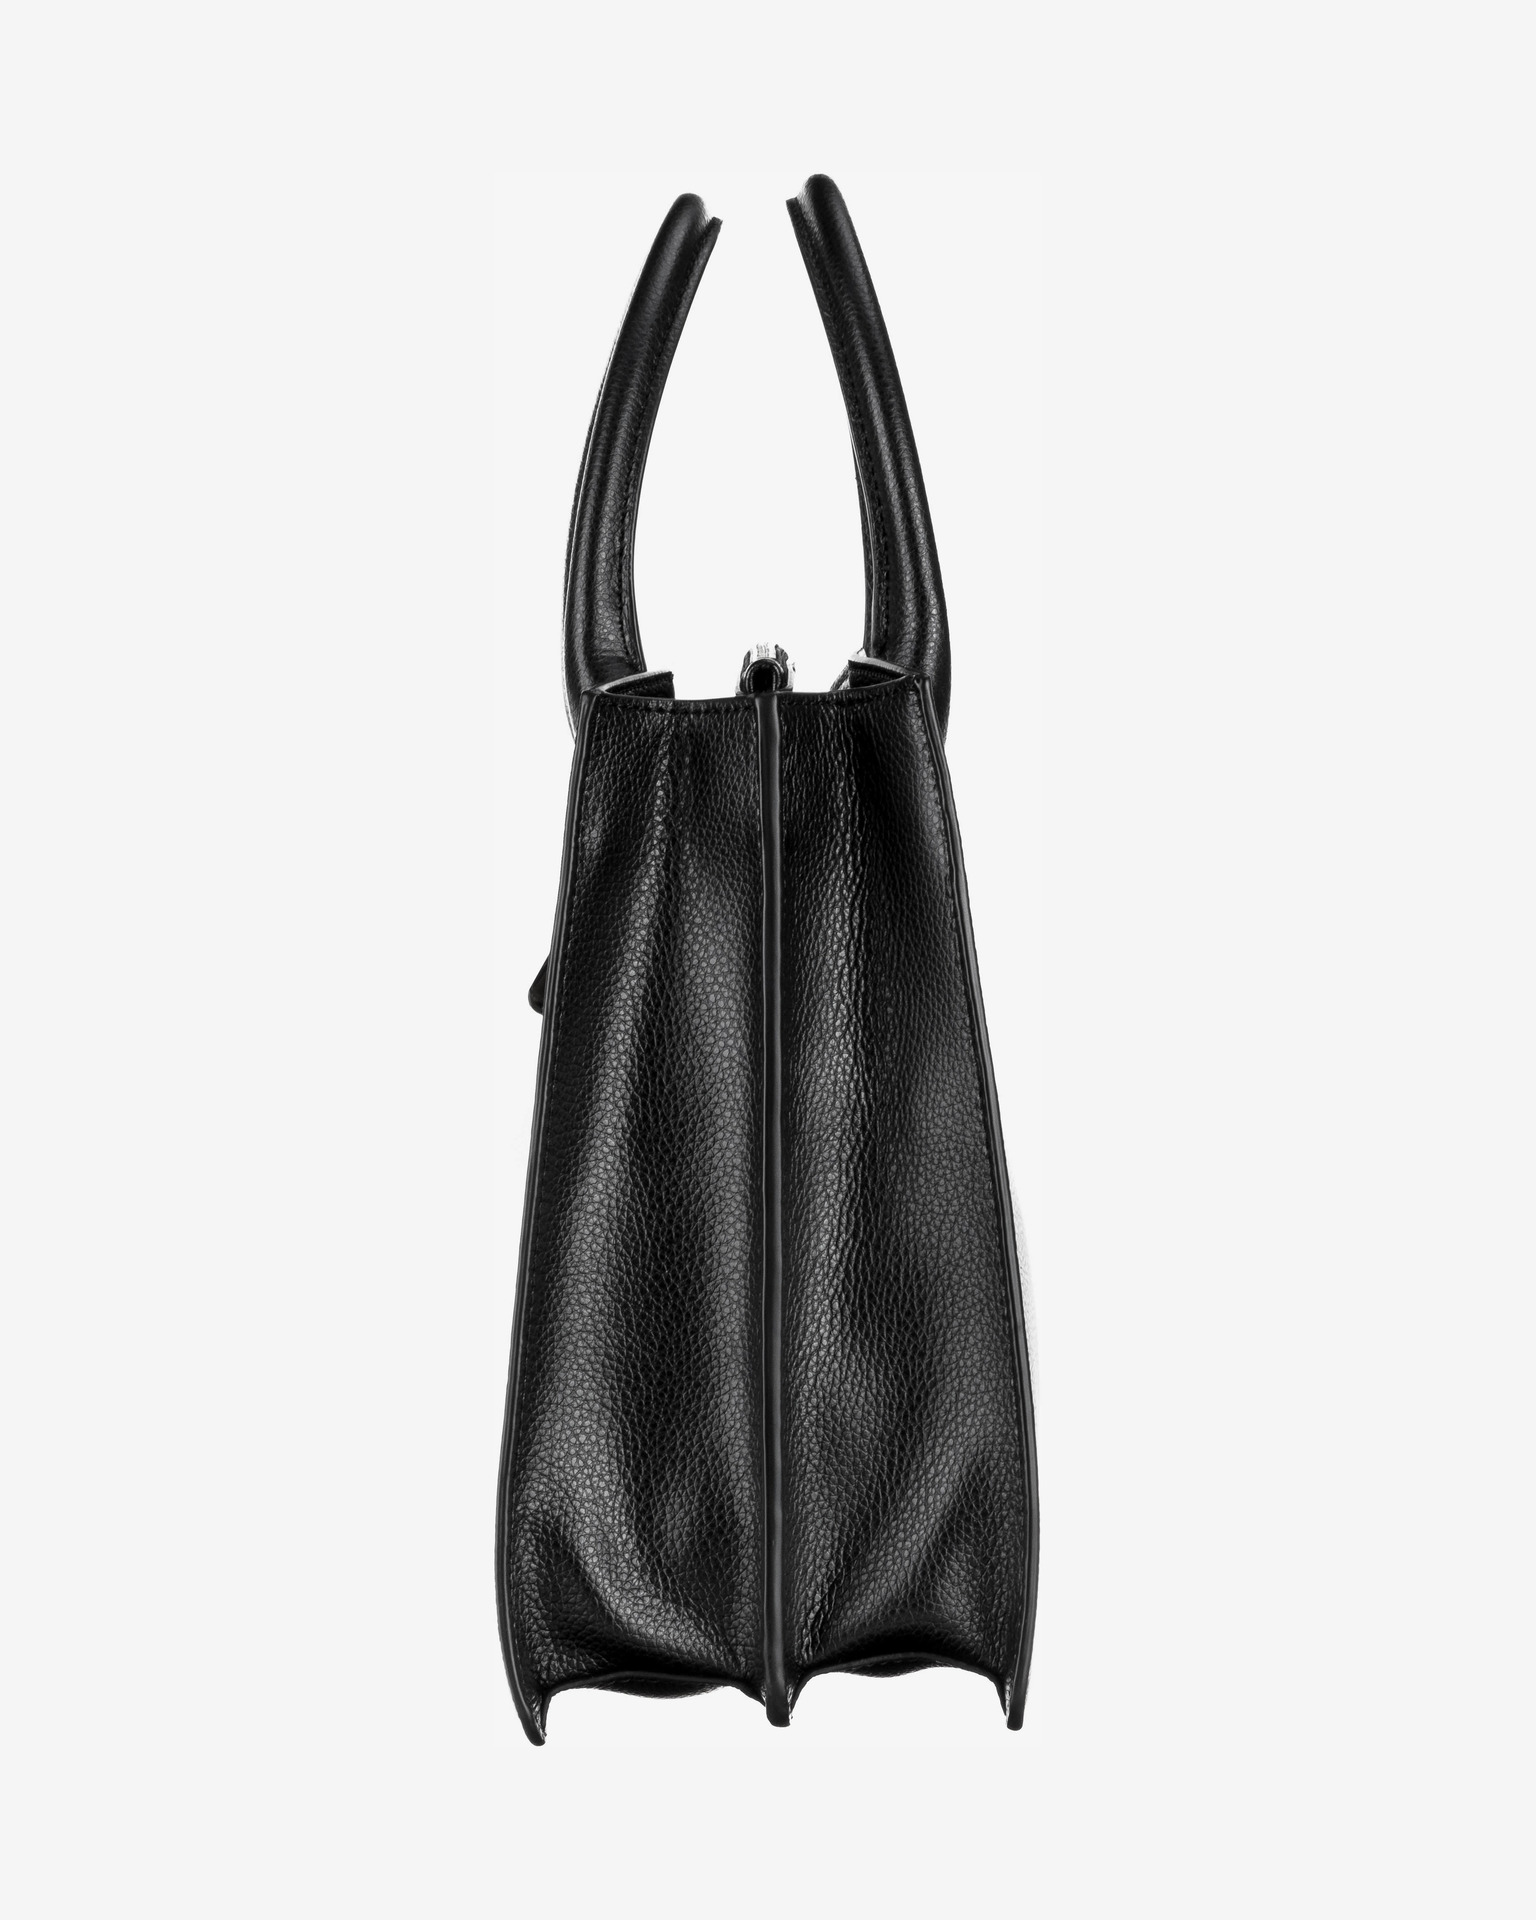 DKNY Elissa Pebbled Charm Iconic Black Graffiti/Silver Mini Crossbody Bag